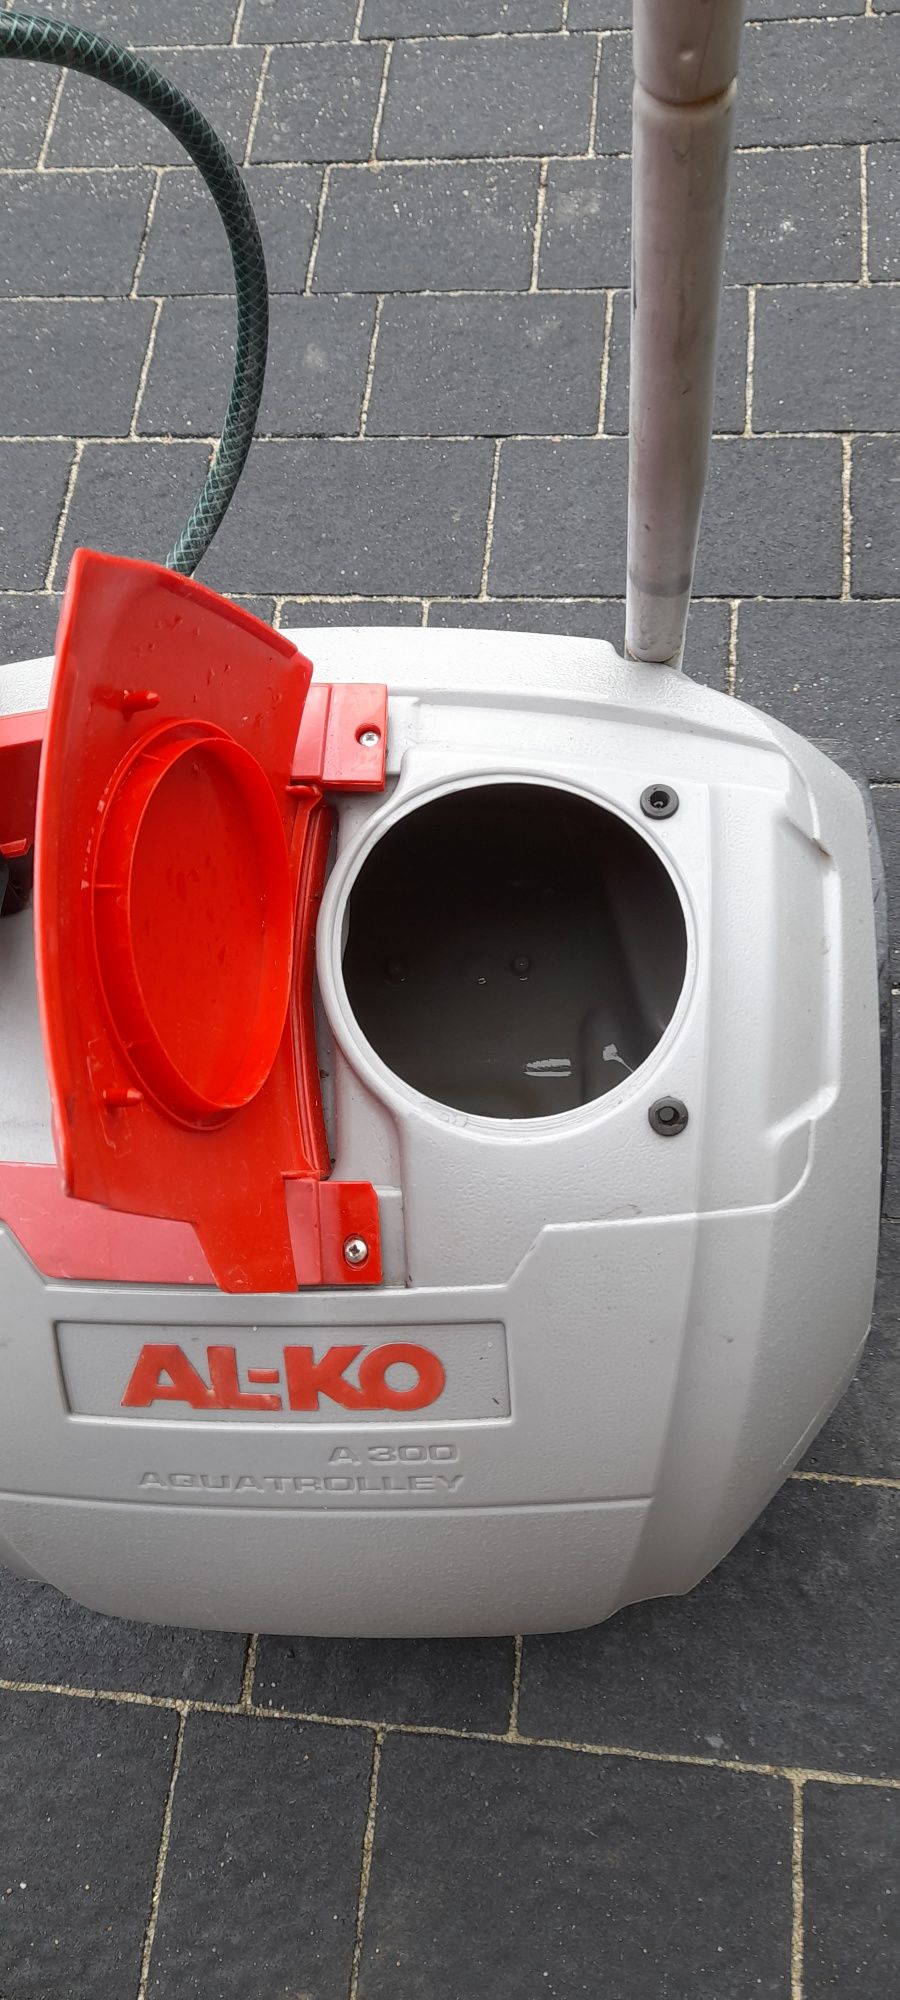 Konewka elektryczna AL-KO A300 Aquatrolley